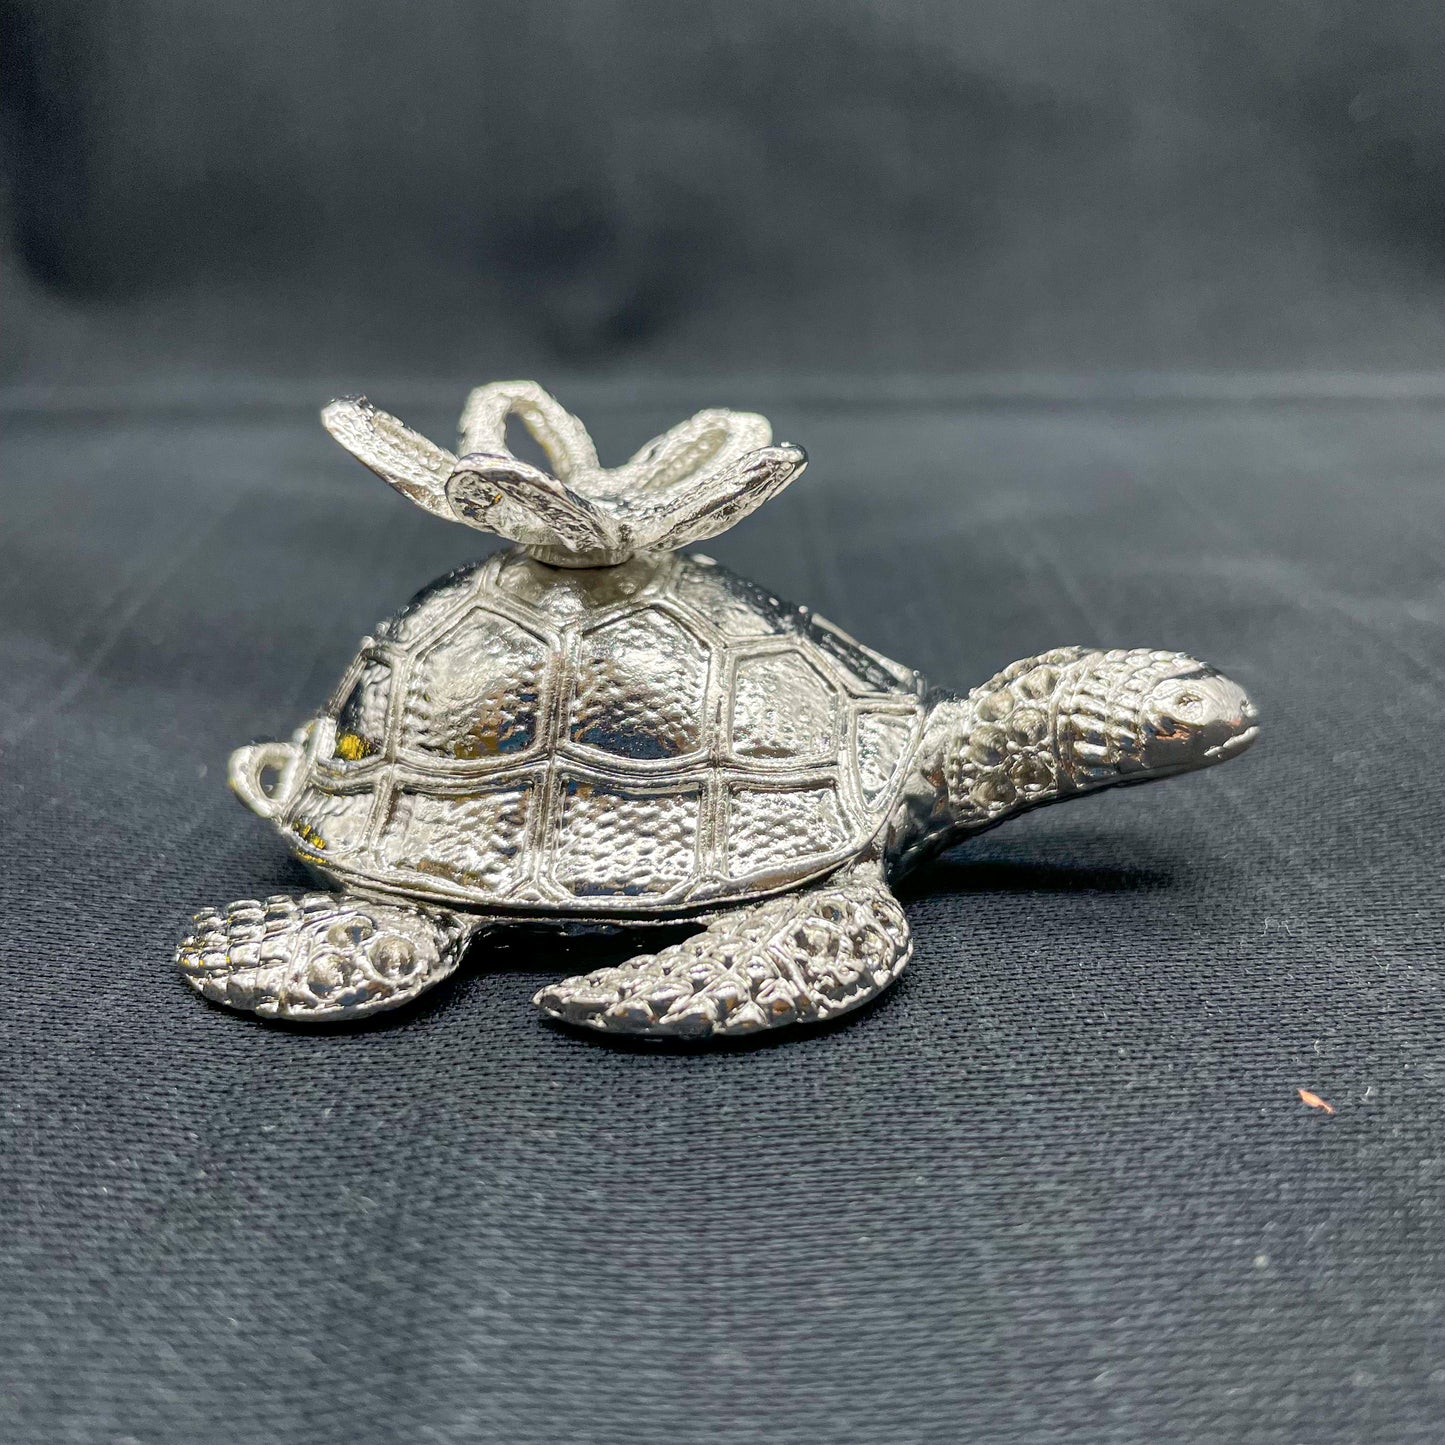 1PC Metal Sea Turtle Holder For Crystal Ball Decor Gift